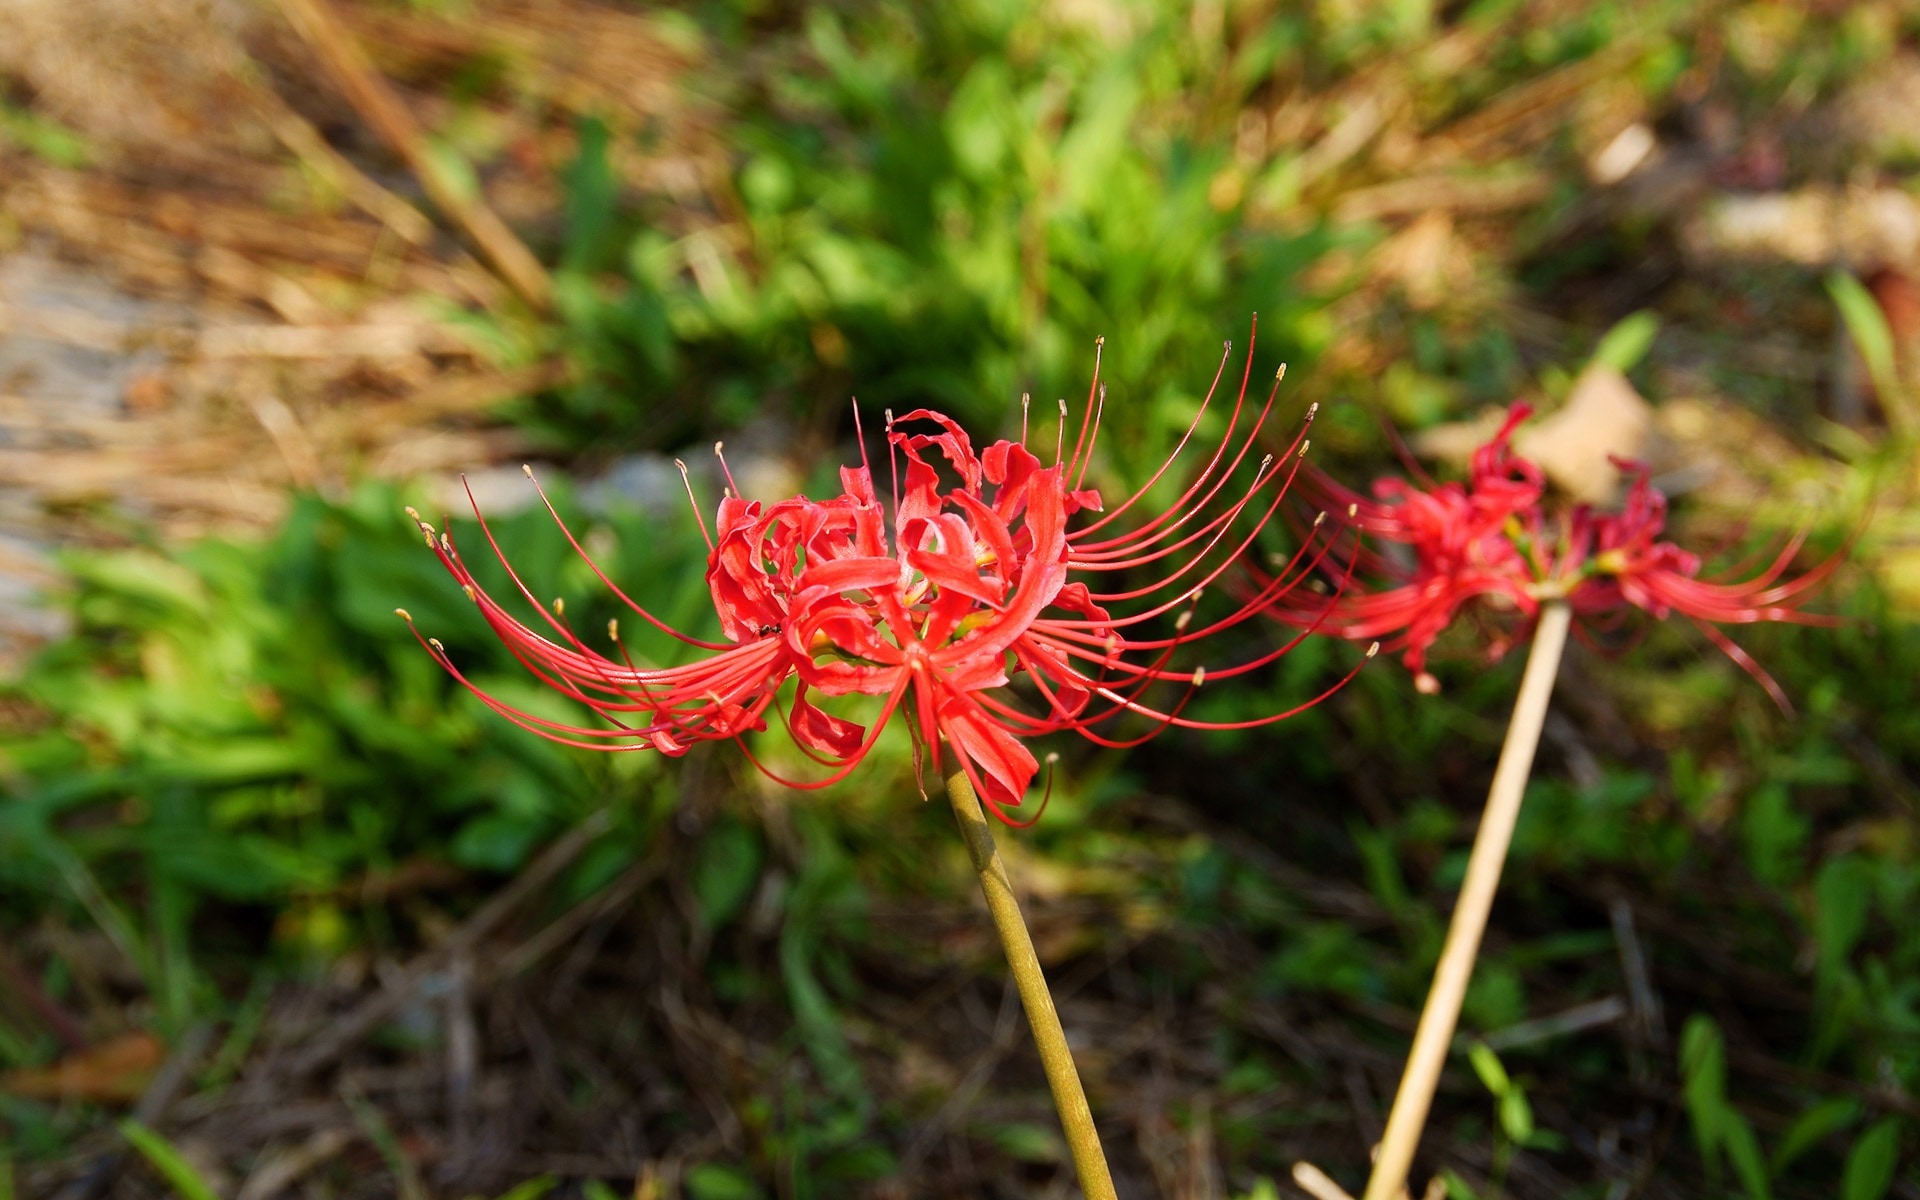 red petaled flower